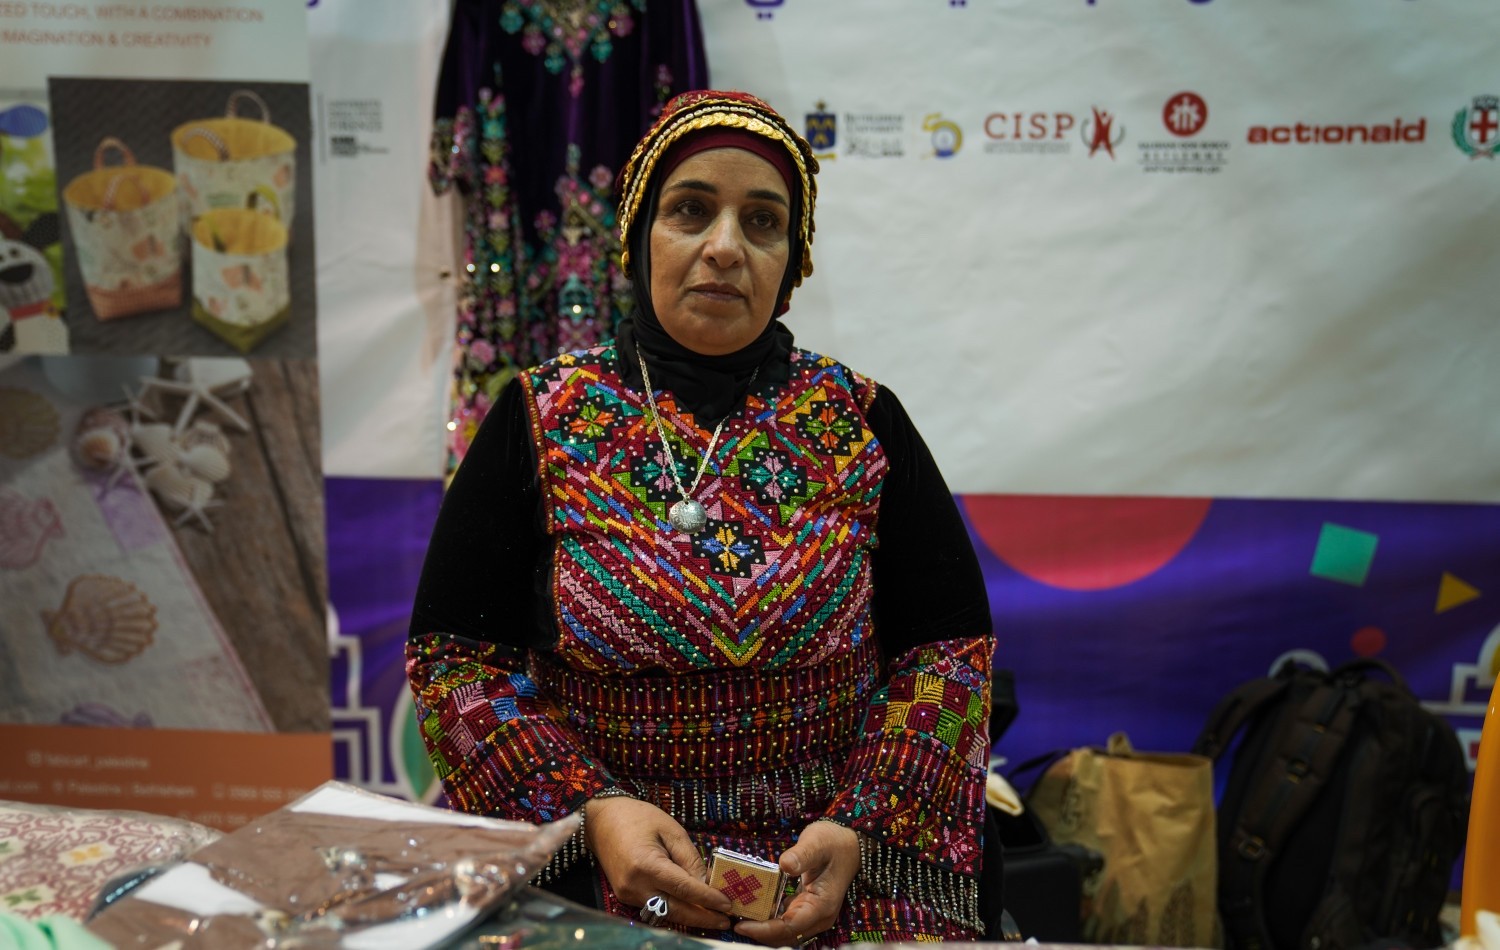 Palestina: più opportunità per le imprese a guida femminile